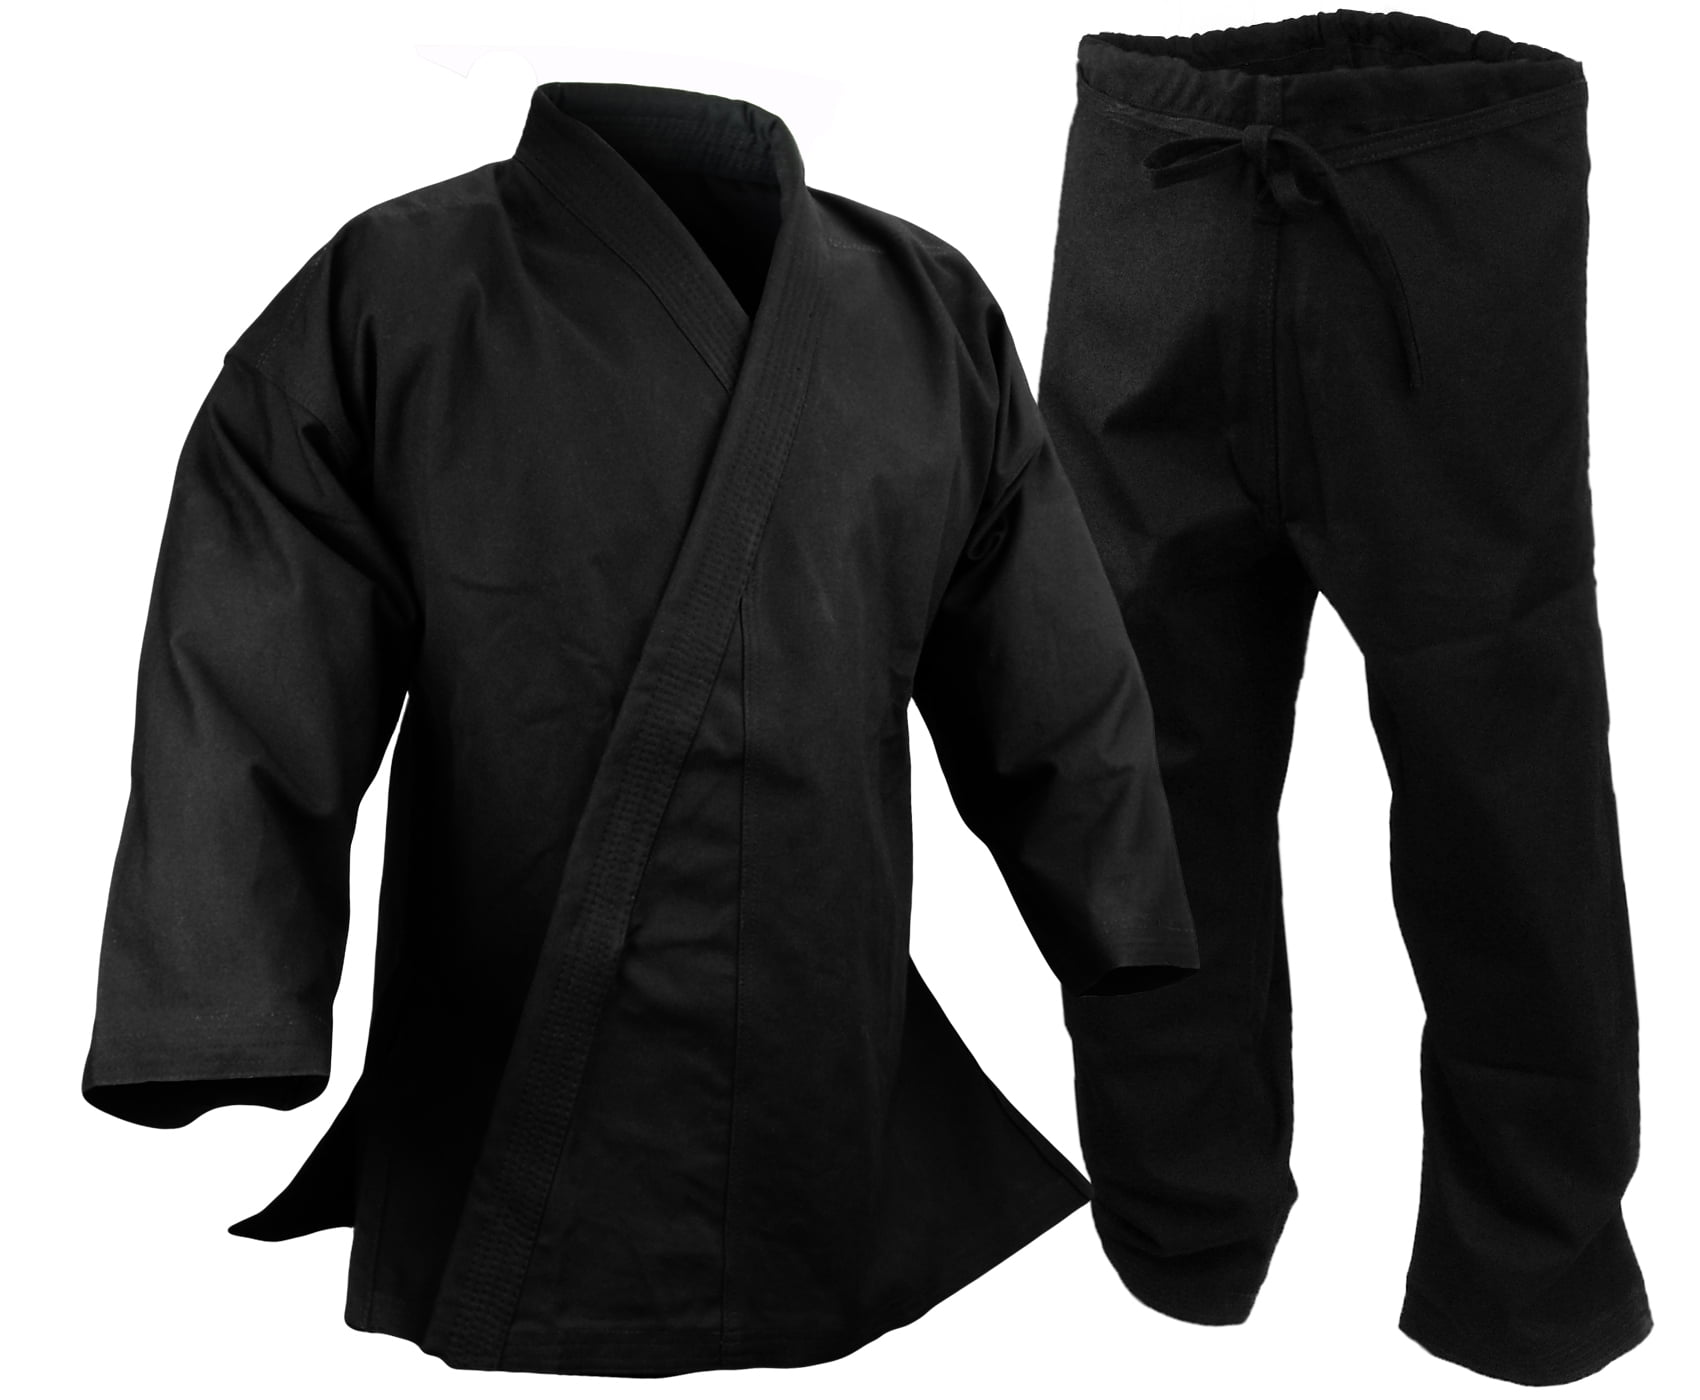 KANKU New Karate Uniform 12 oz Heavy Weight Black and White Martial ARTS 